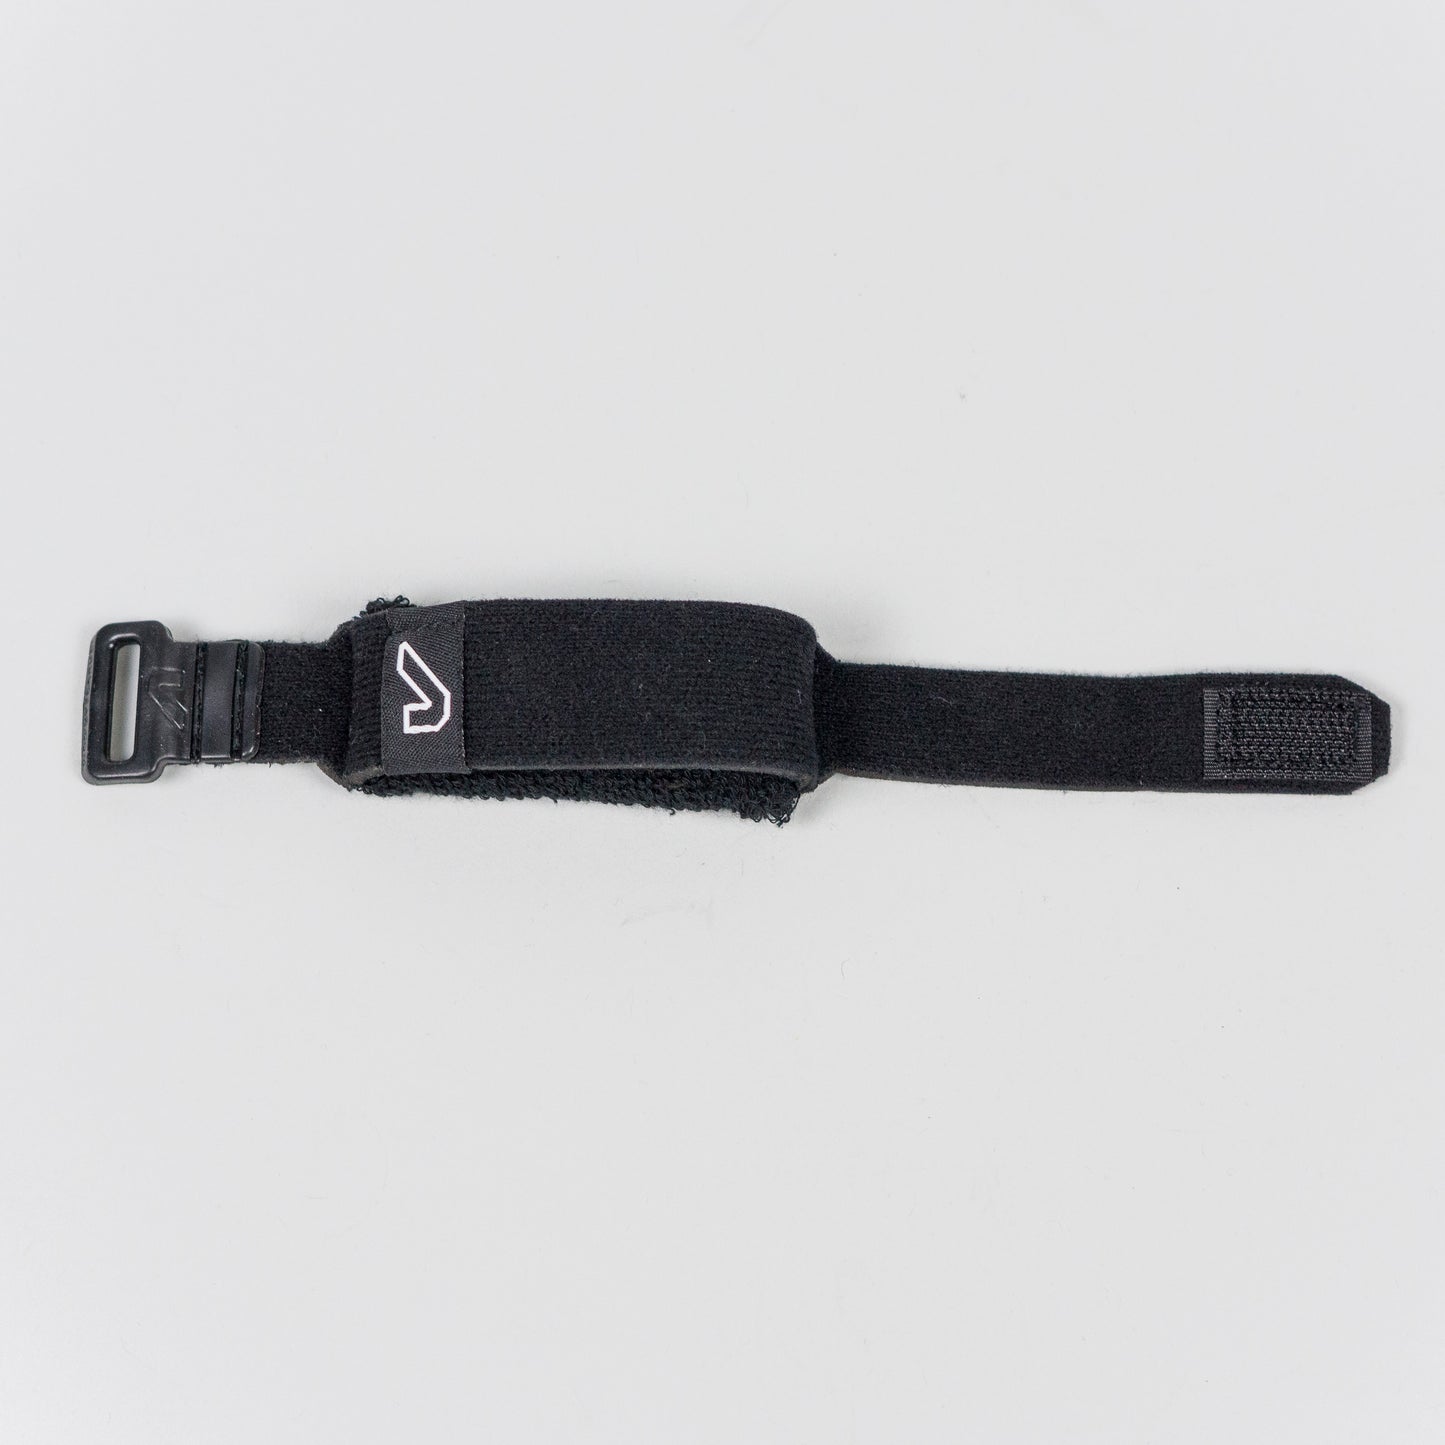 Gruv Gear FretWrap String Muter 1-Pack in Black, Size Large